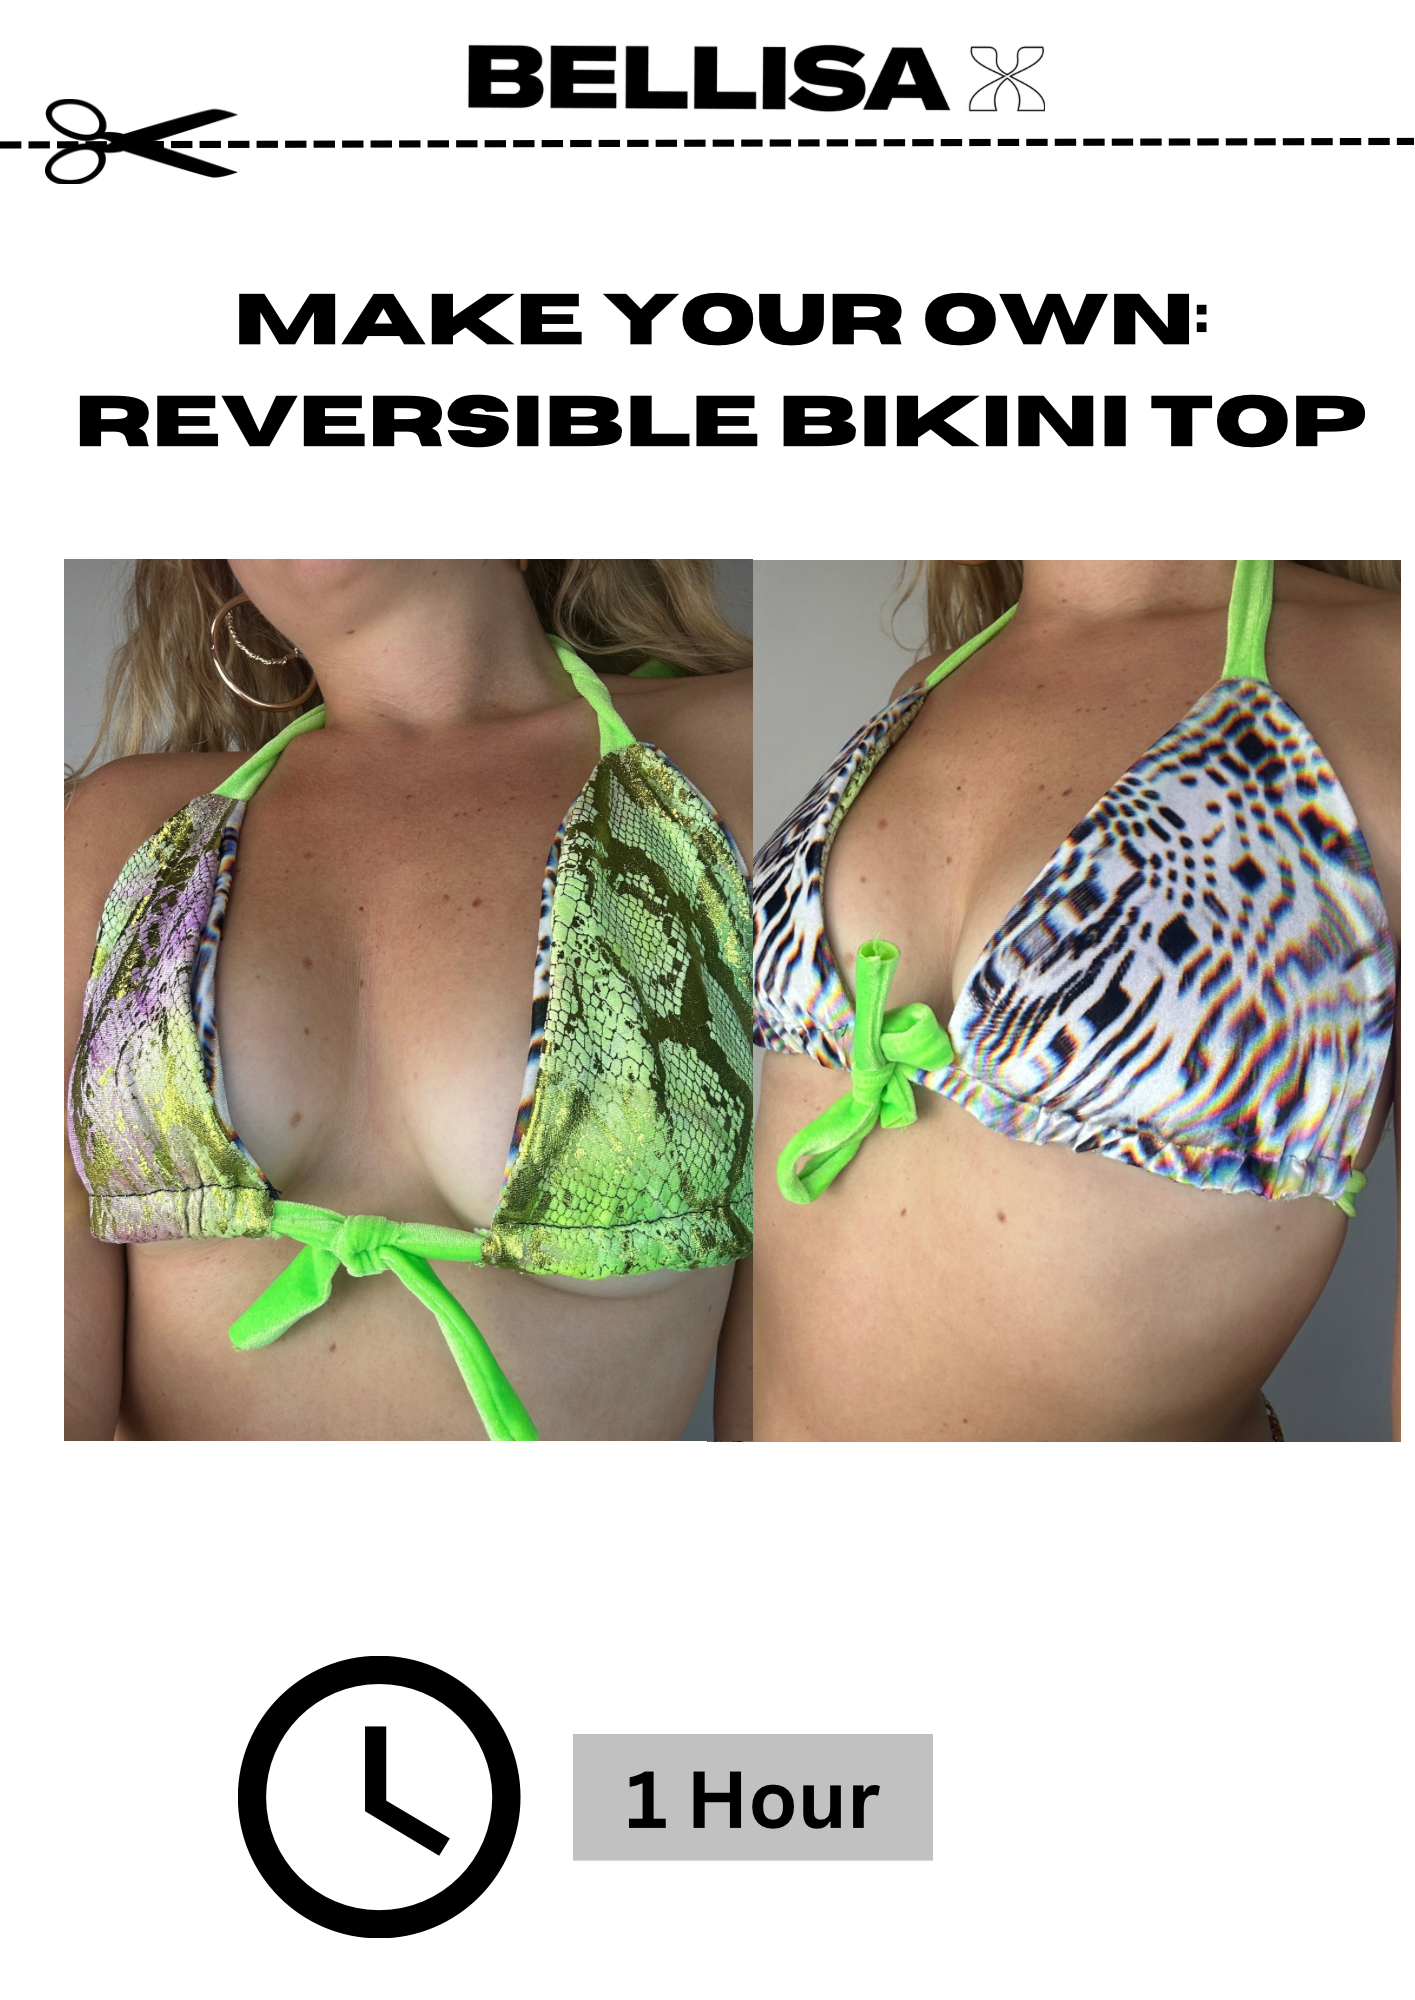 Make Your Own: Reverisble Bikini Top